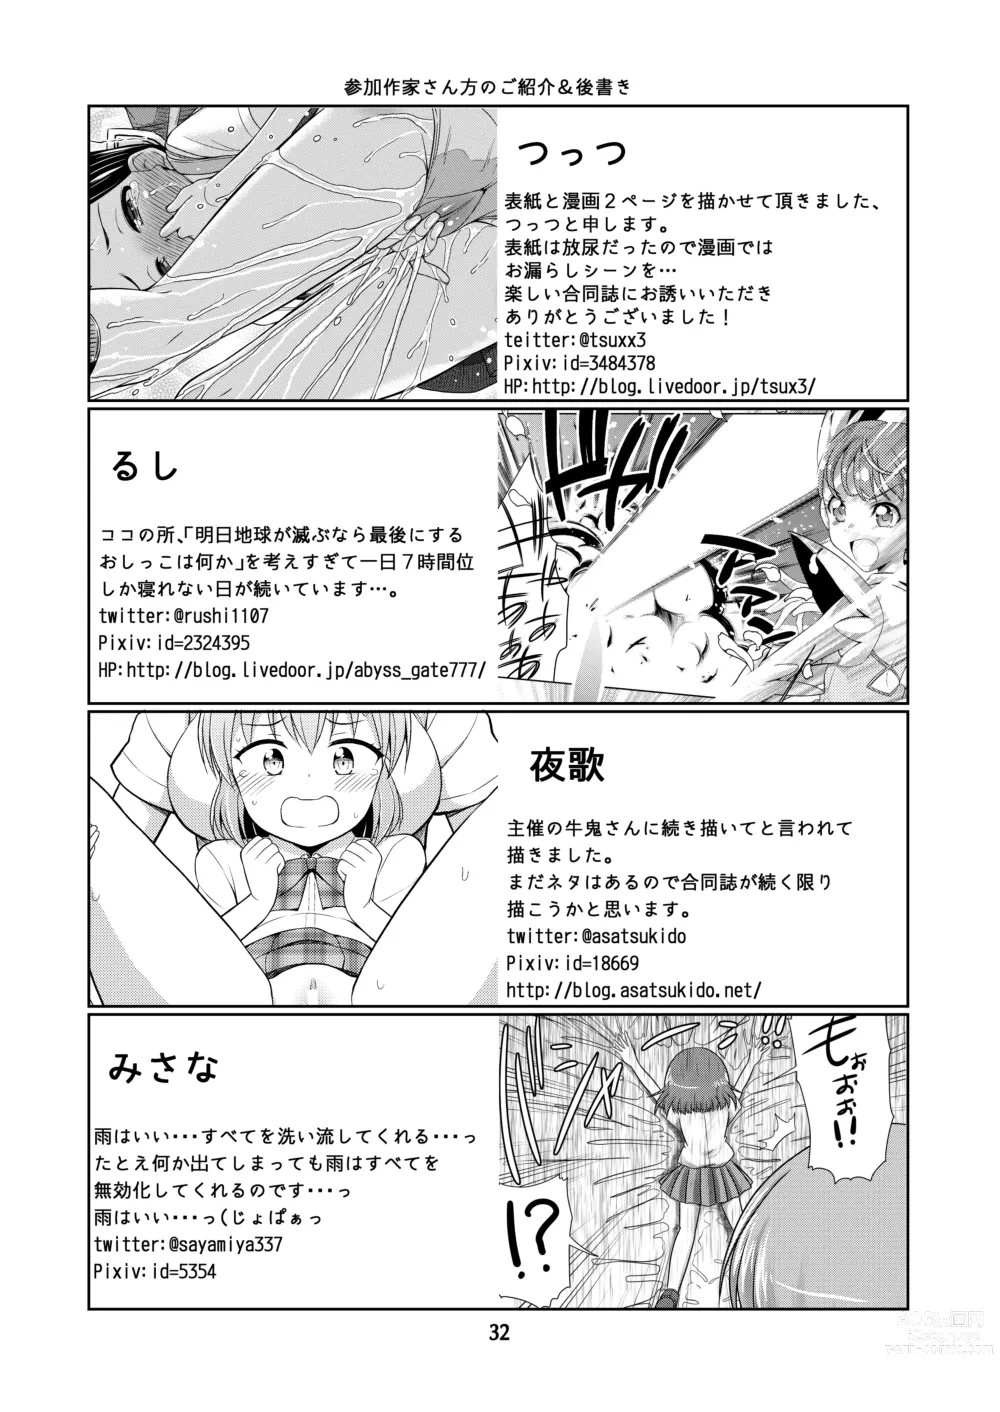 Page 31 of doujinshi PeeGirlsIZM02